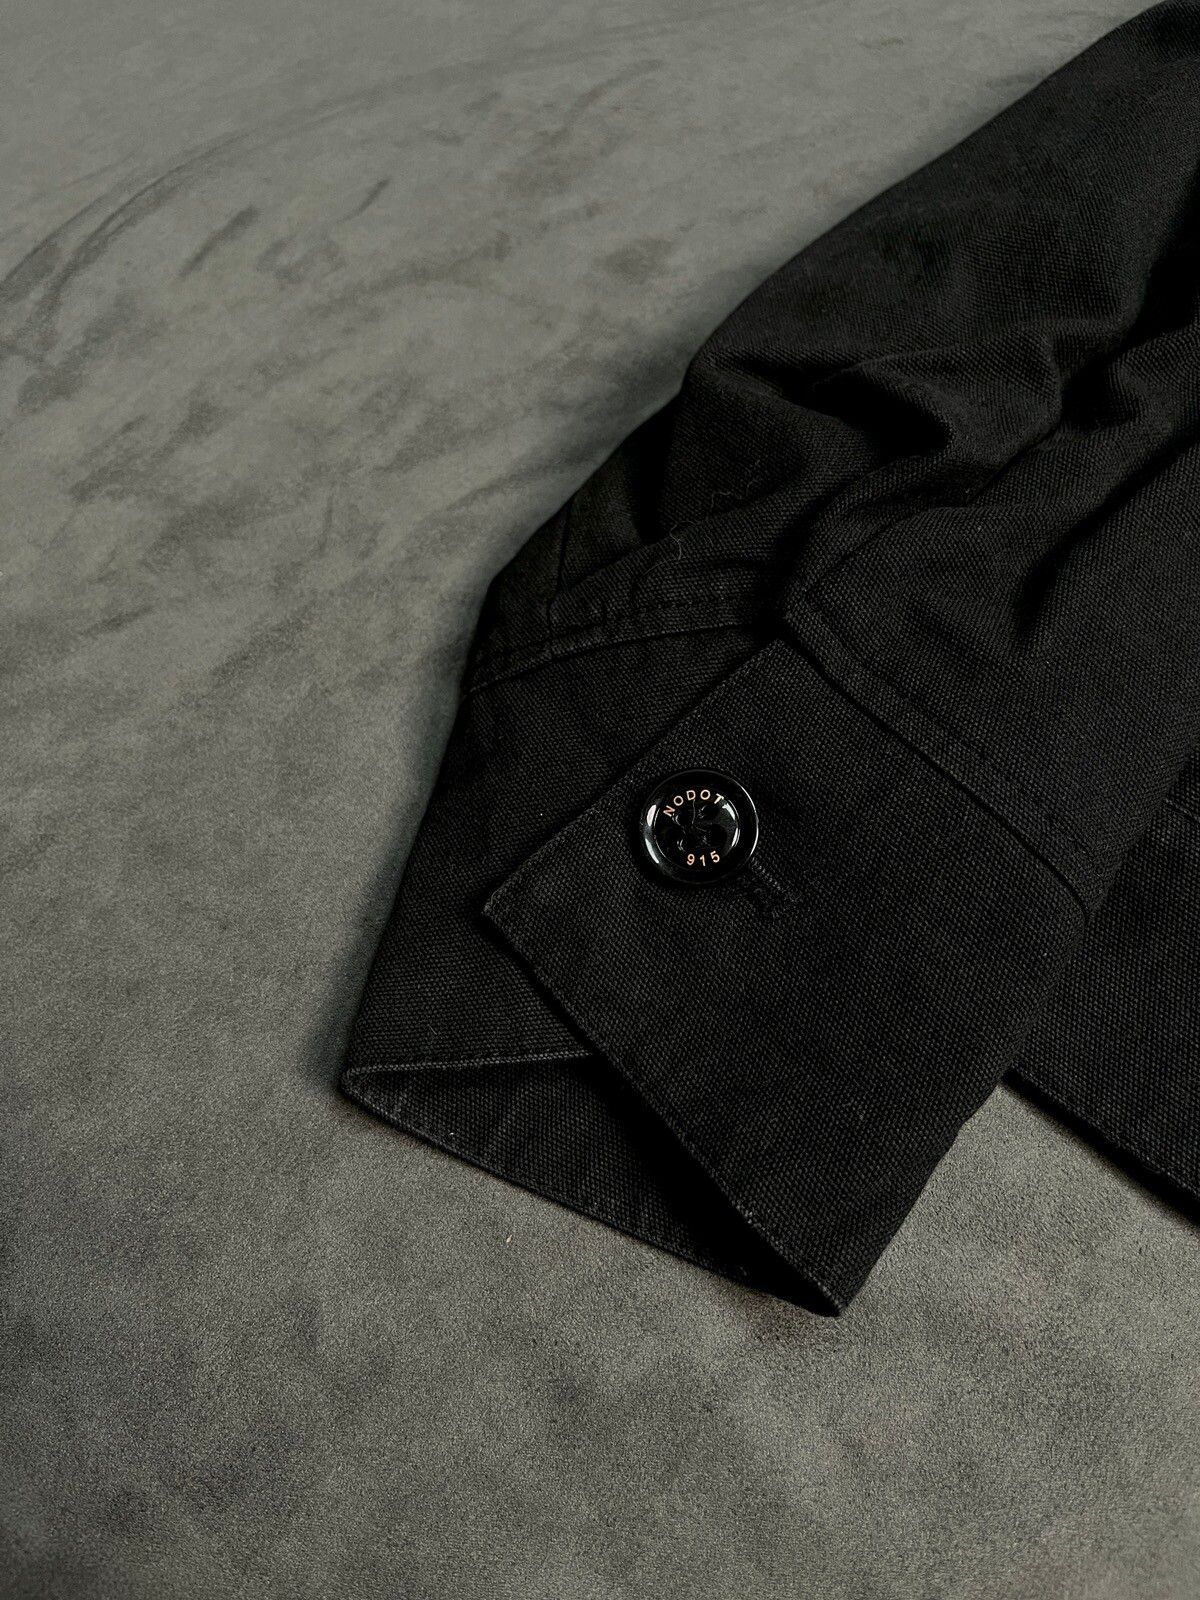 Hype - Nodot Y2k Two Way Zipper Black Workwear Jacket Medium - 8